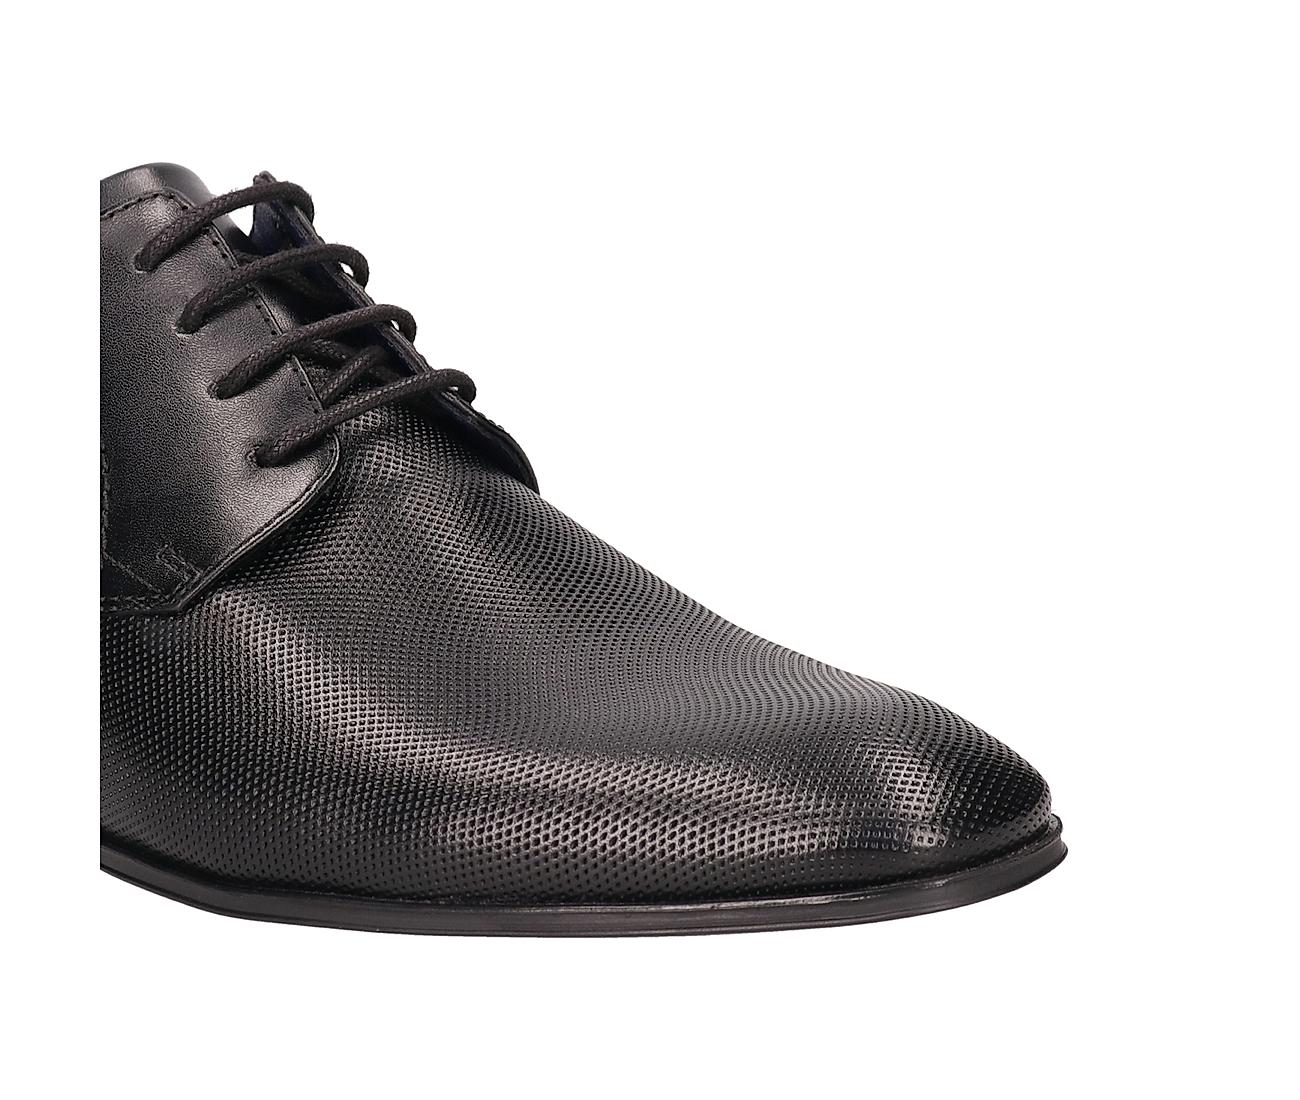 OFFICE Cromer Smart Formal Sneakers Black - Men's Casual Shoes